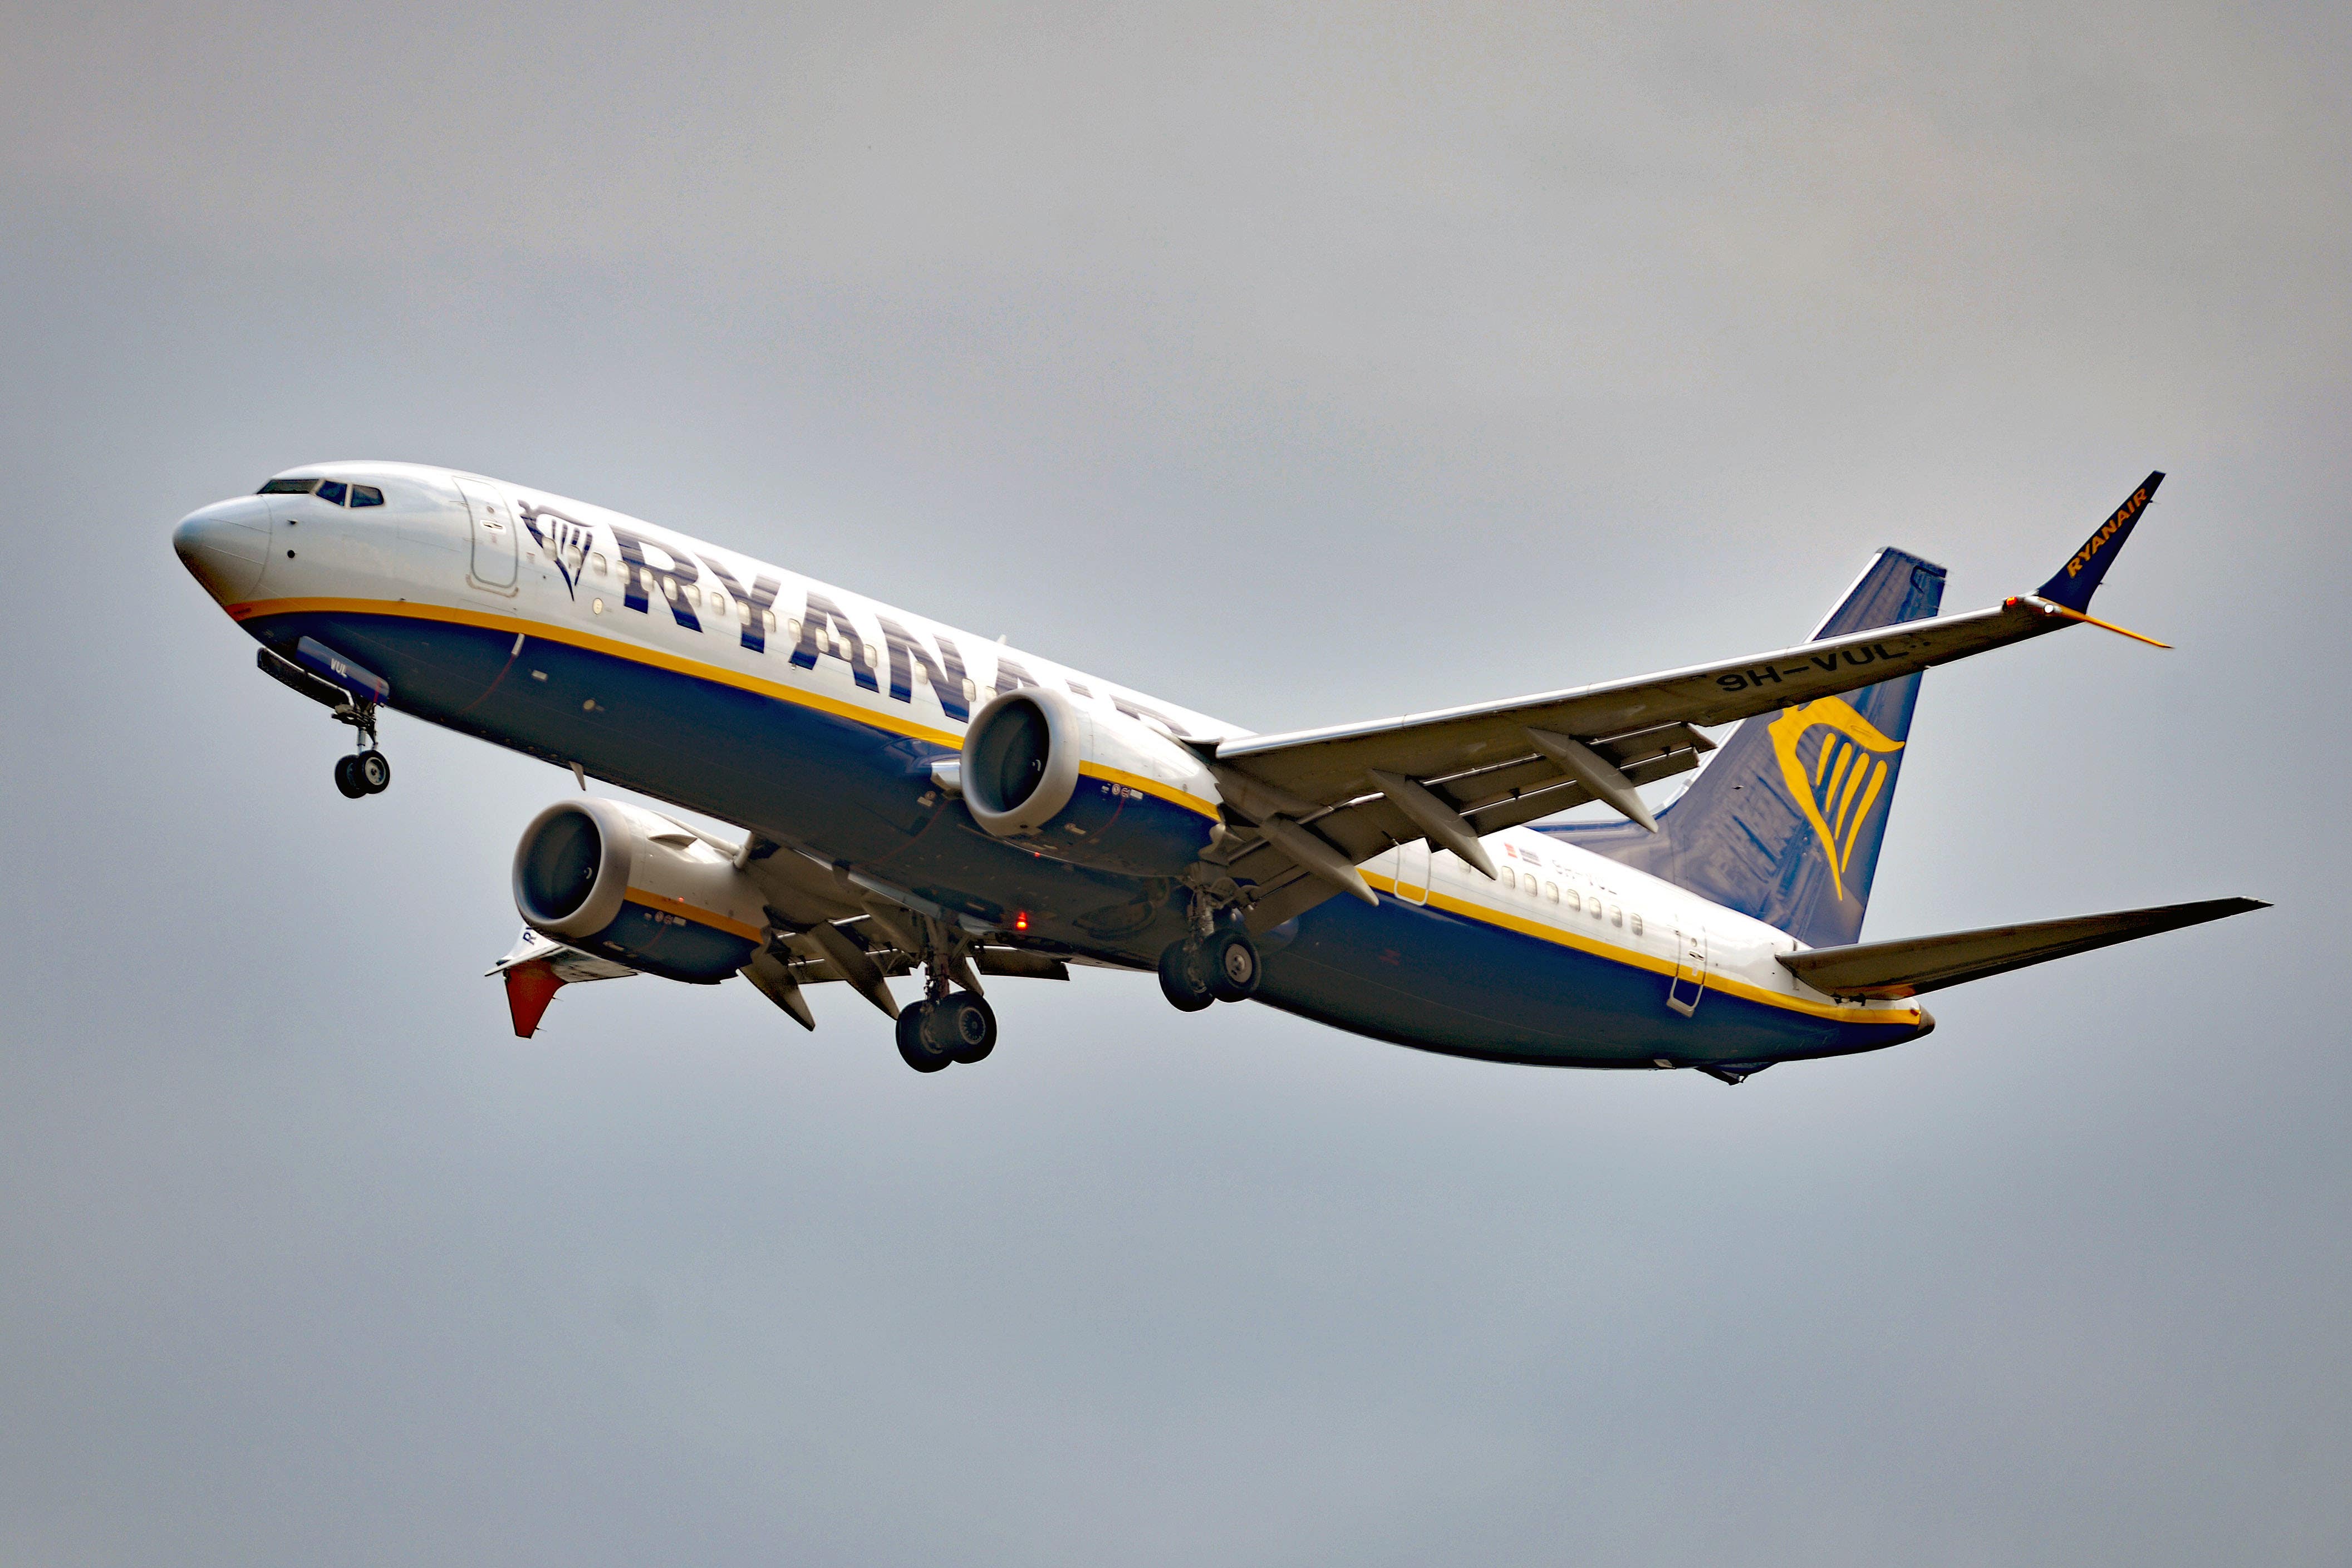 Partnership branded ‘a very important step forward’ by Ryanair